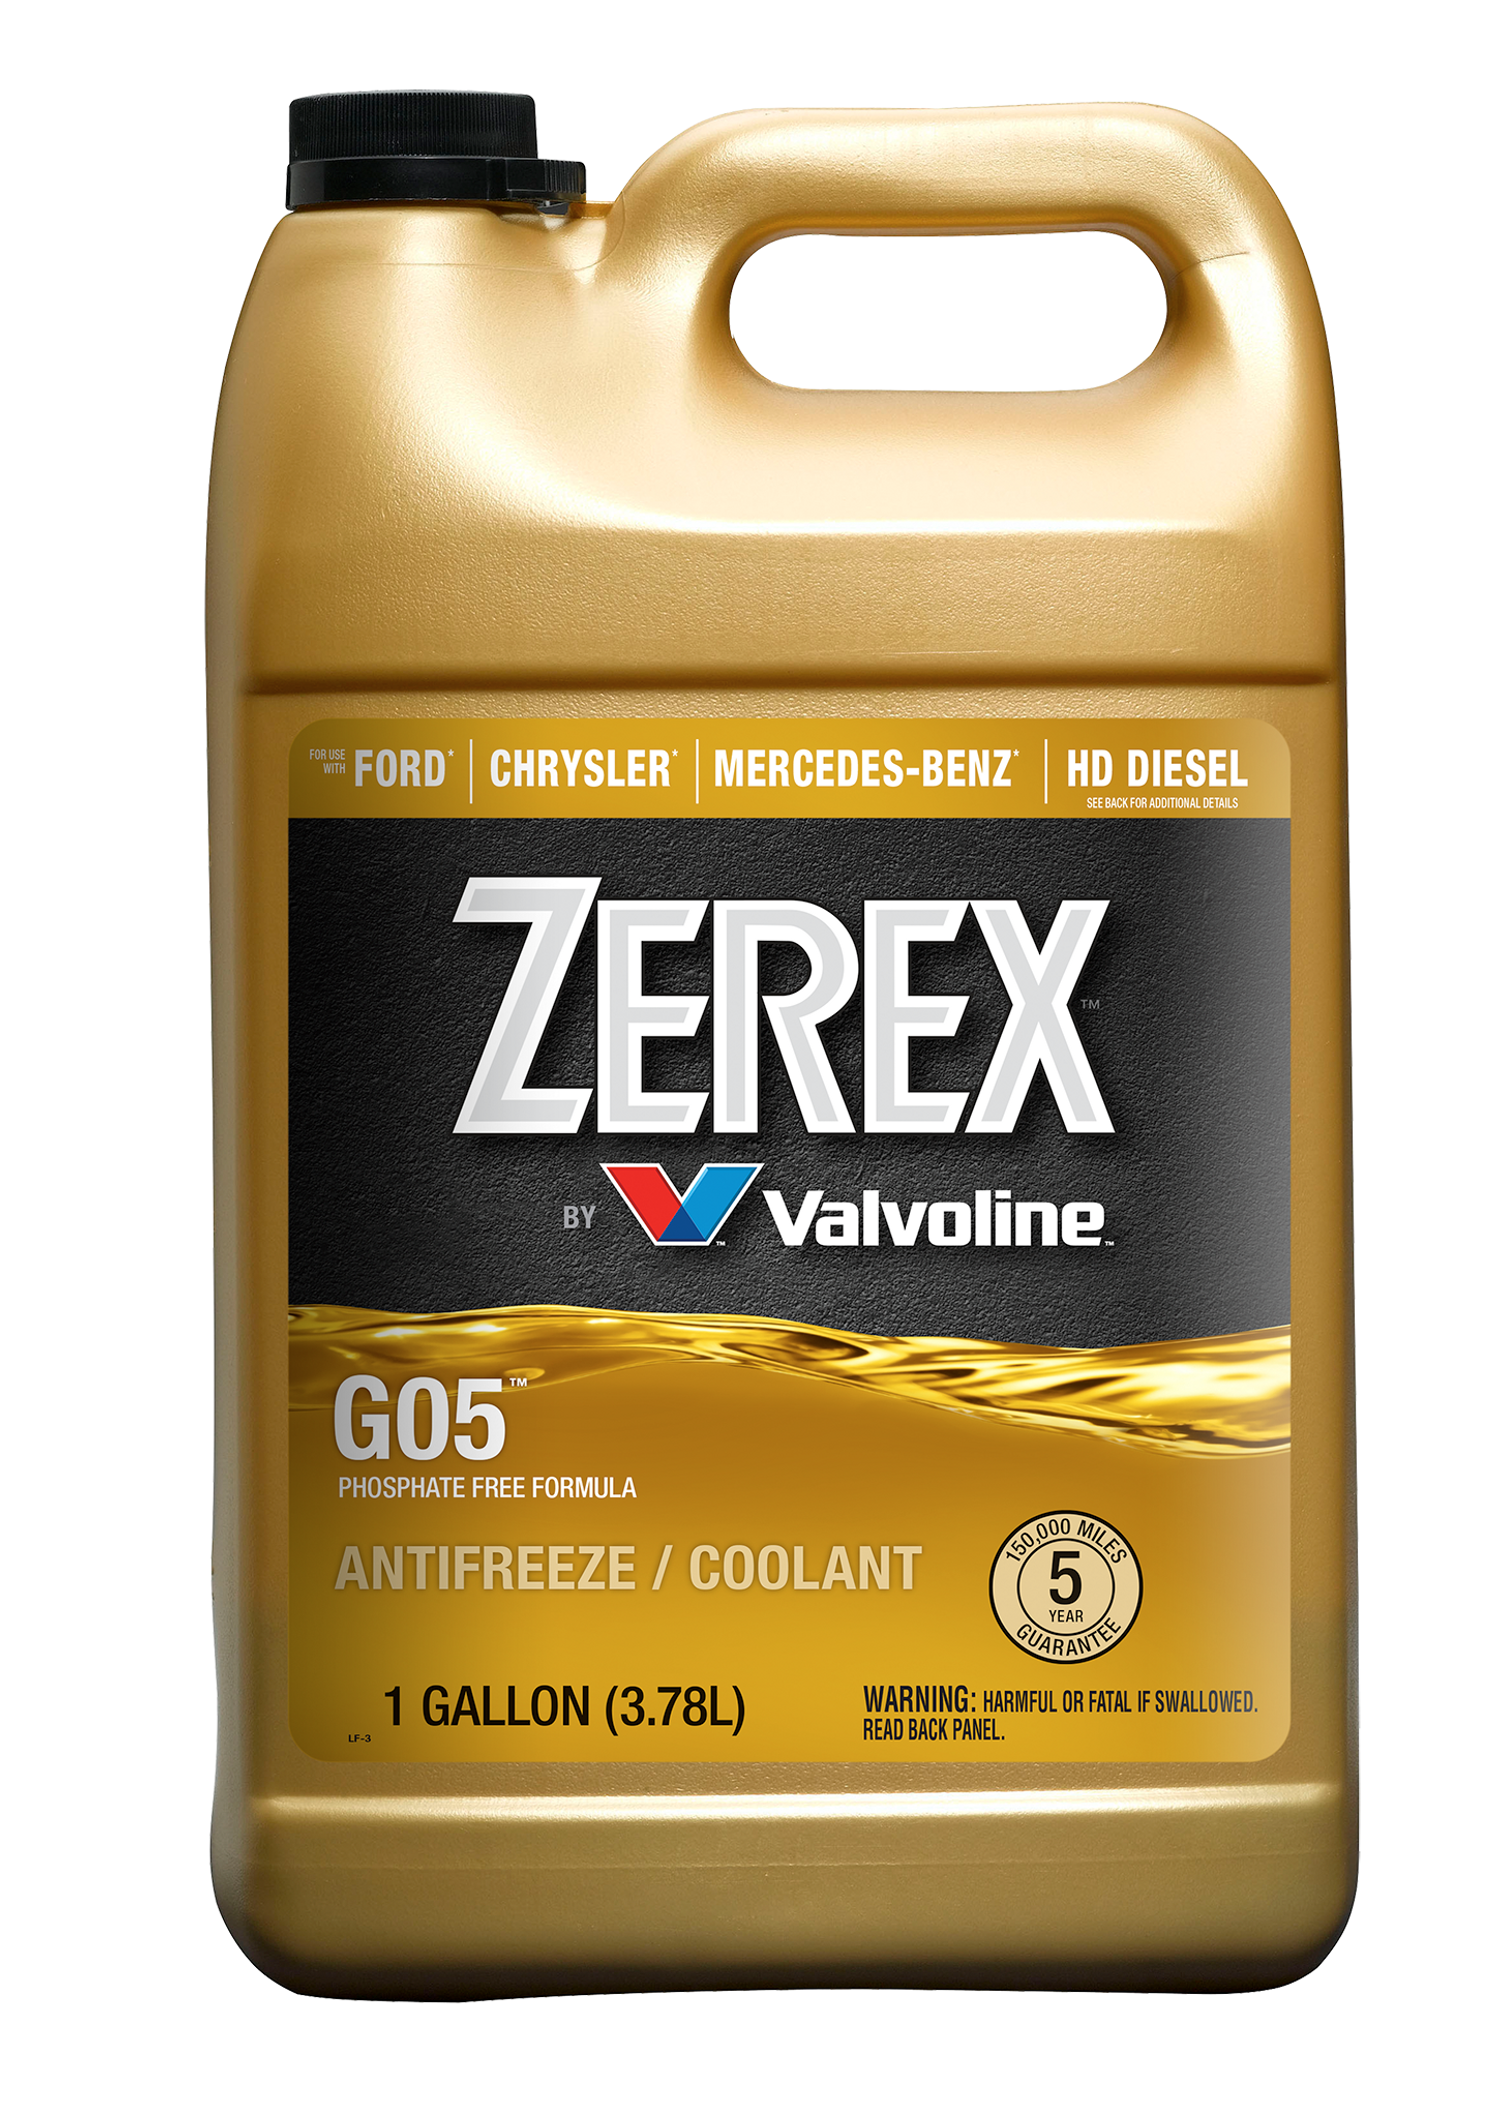 Zerex G05 Phosphate Free Antifreeze Coolant Concentrate GA